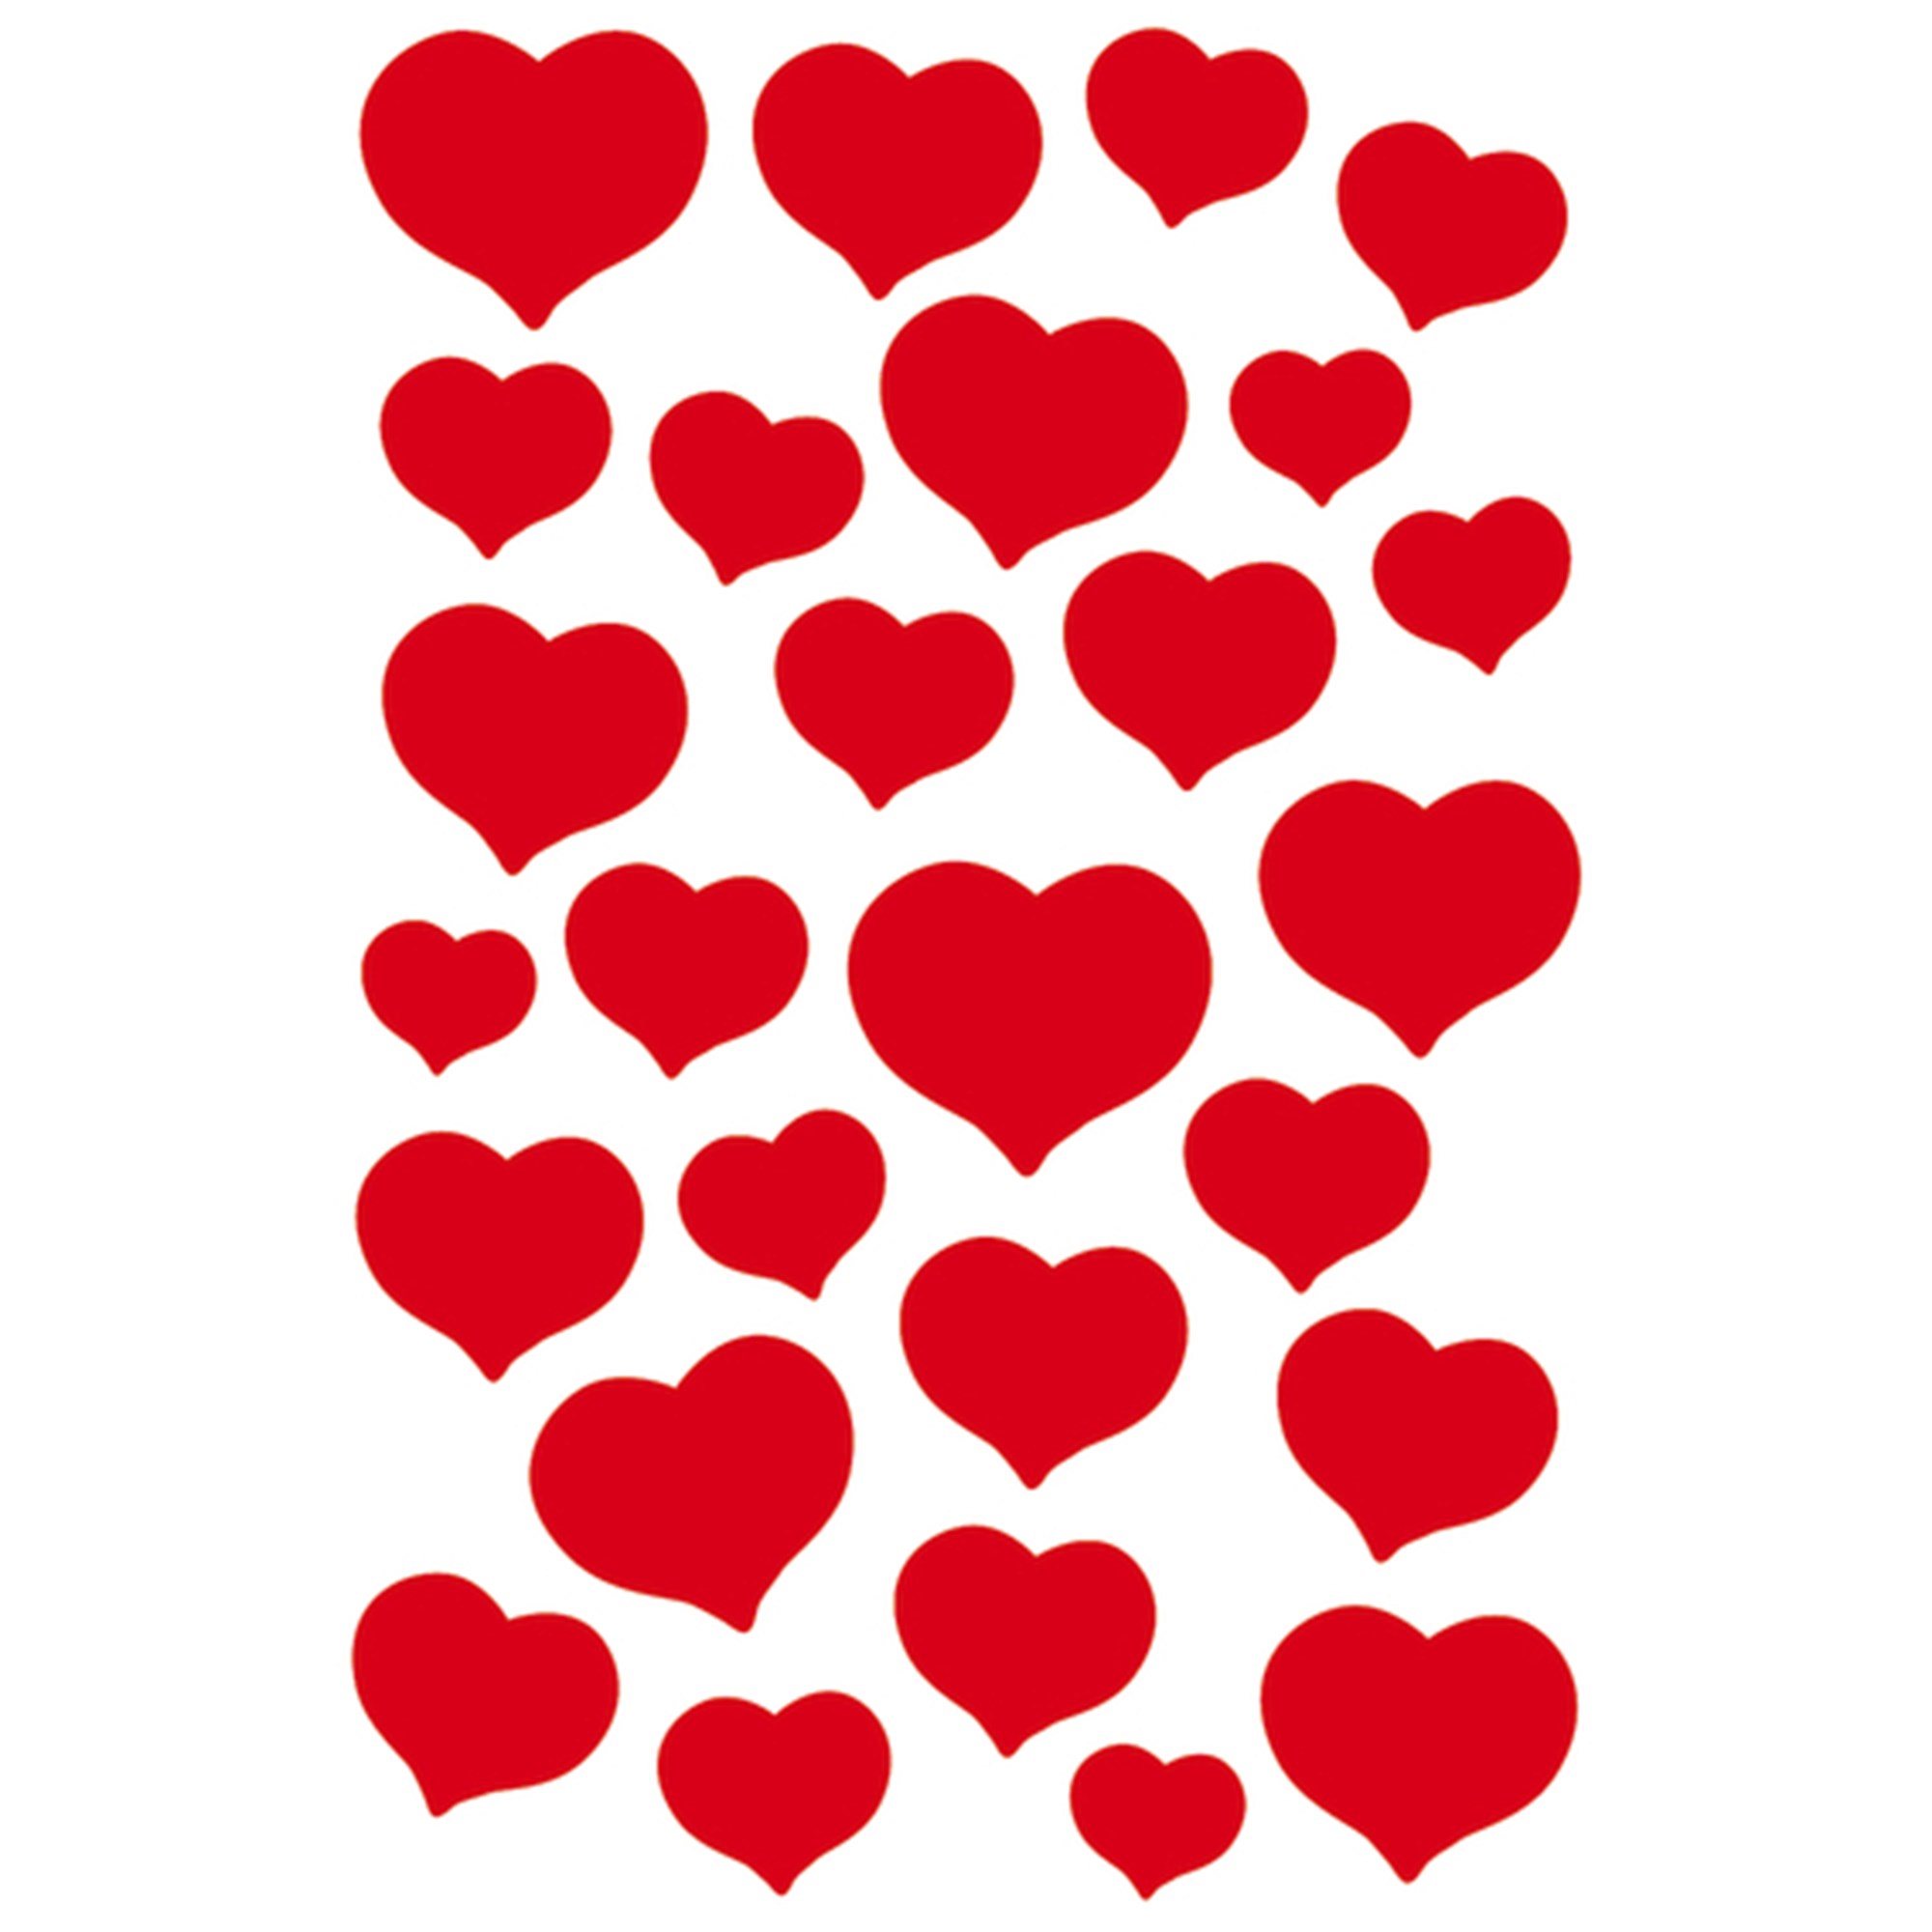 Herma stickers Magic røde hjerter (1)